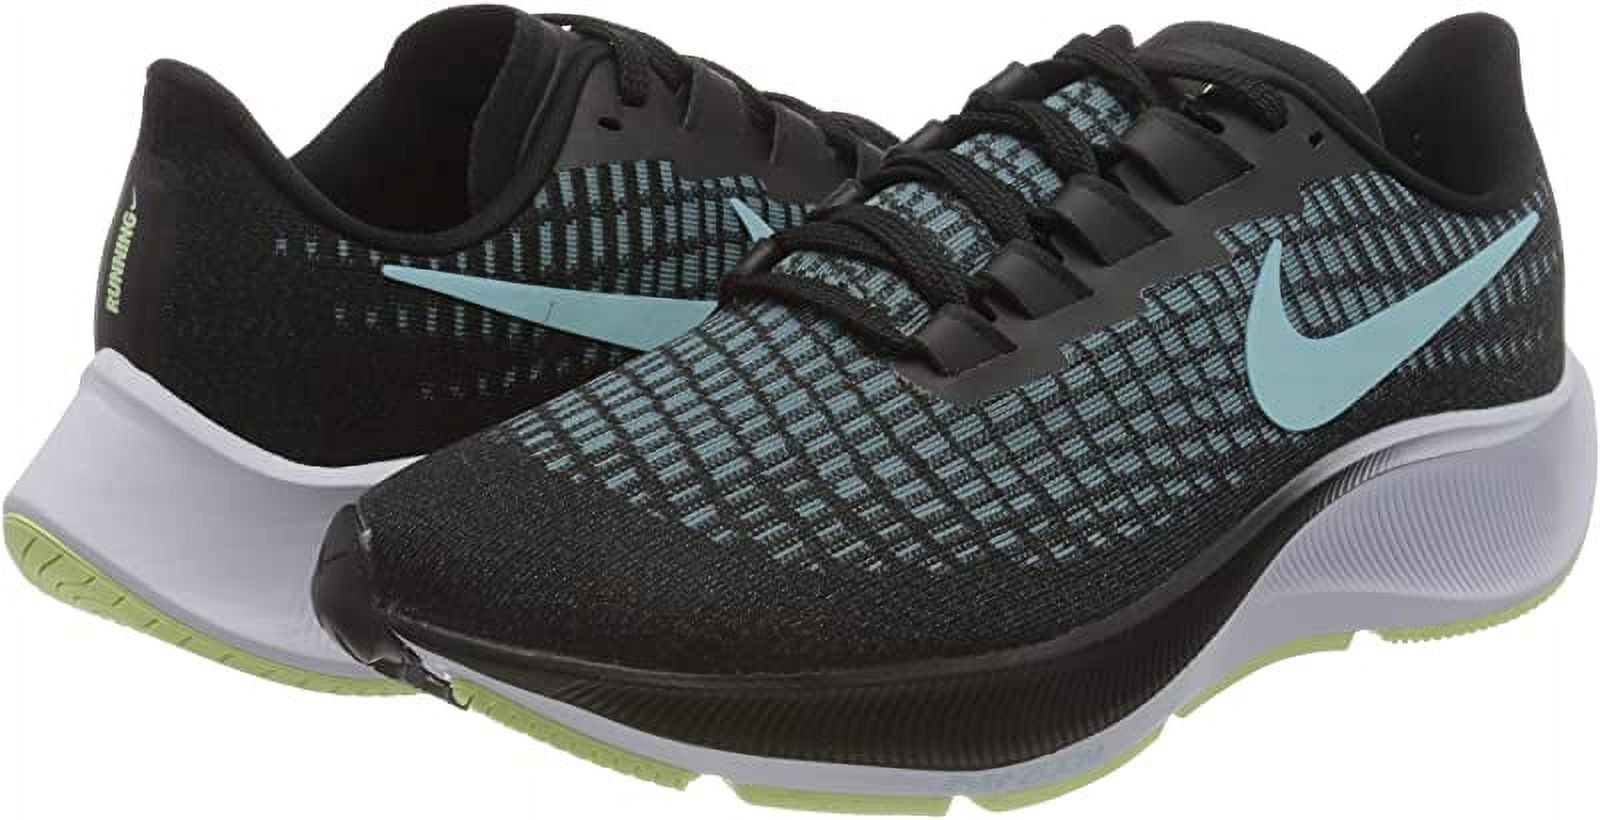 Nike Women's Air Zoom Pegasus 37 Running Shoes, Glacier Ice/Volt, 7.5 B(M) US - image 4 of 4